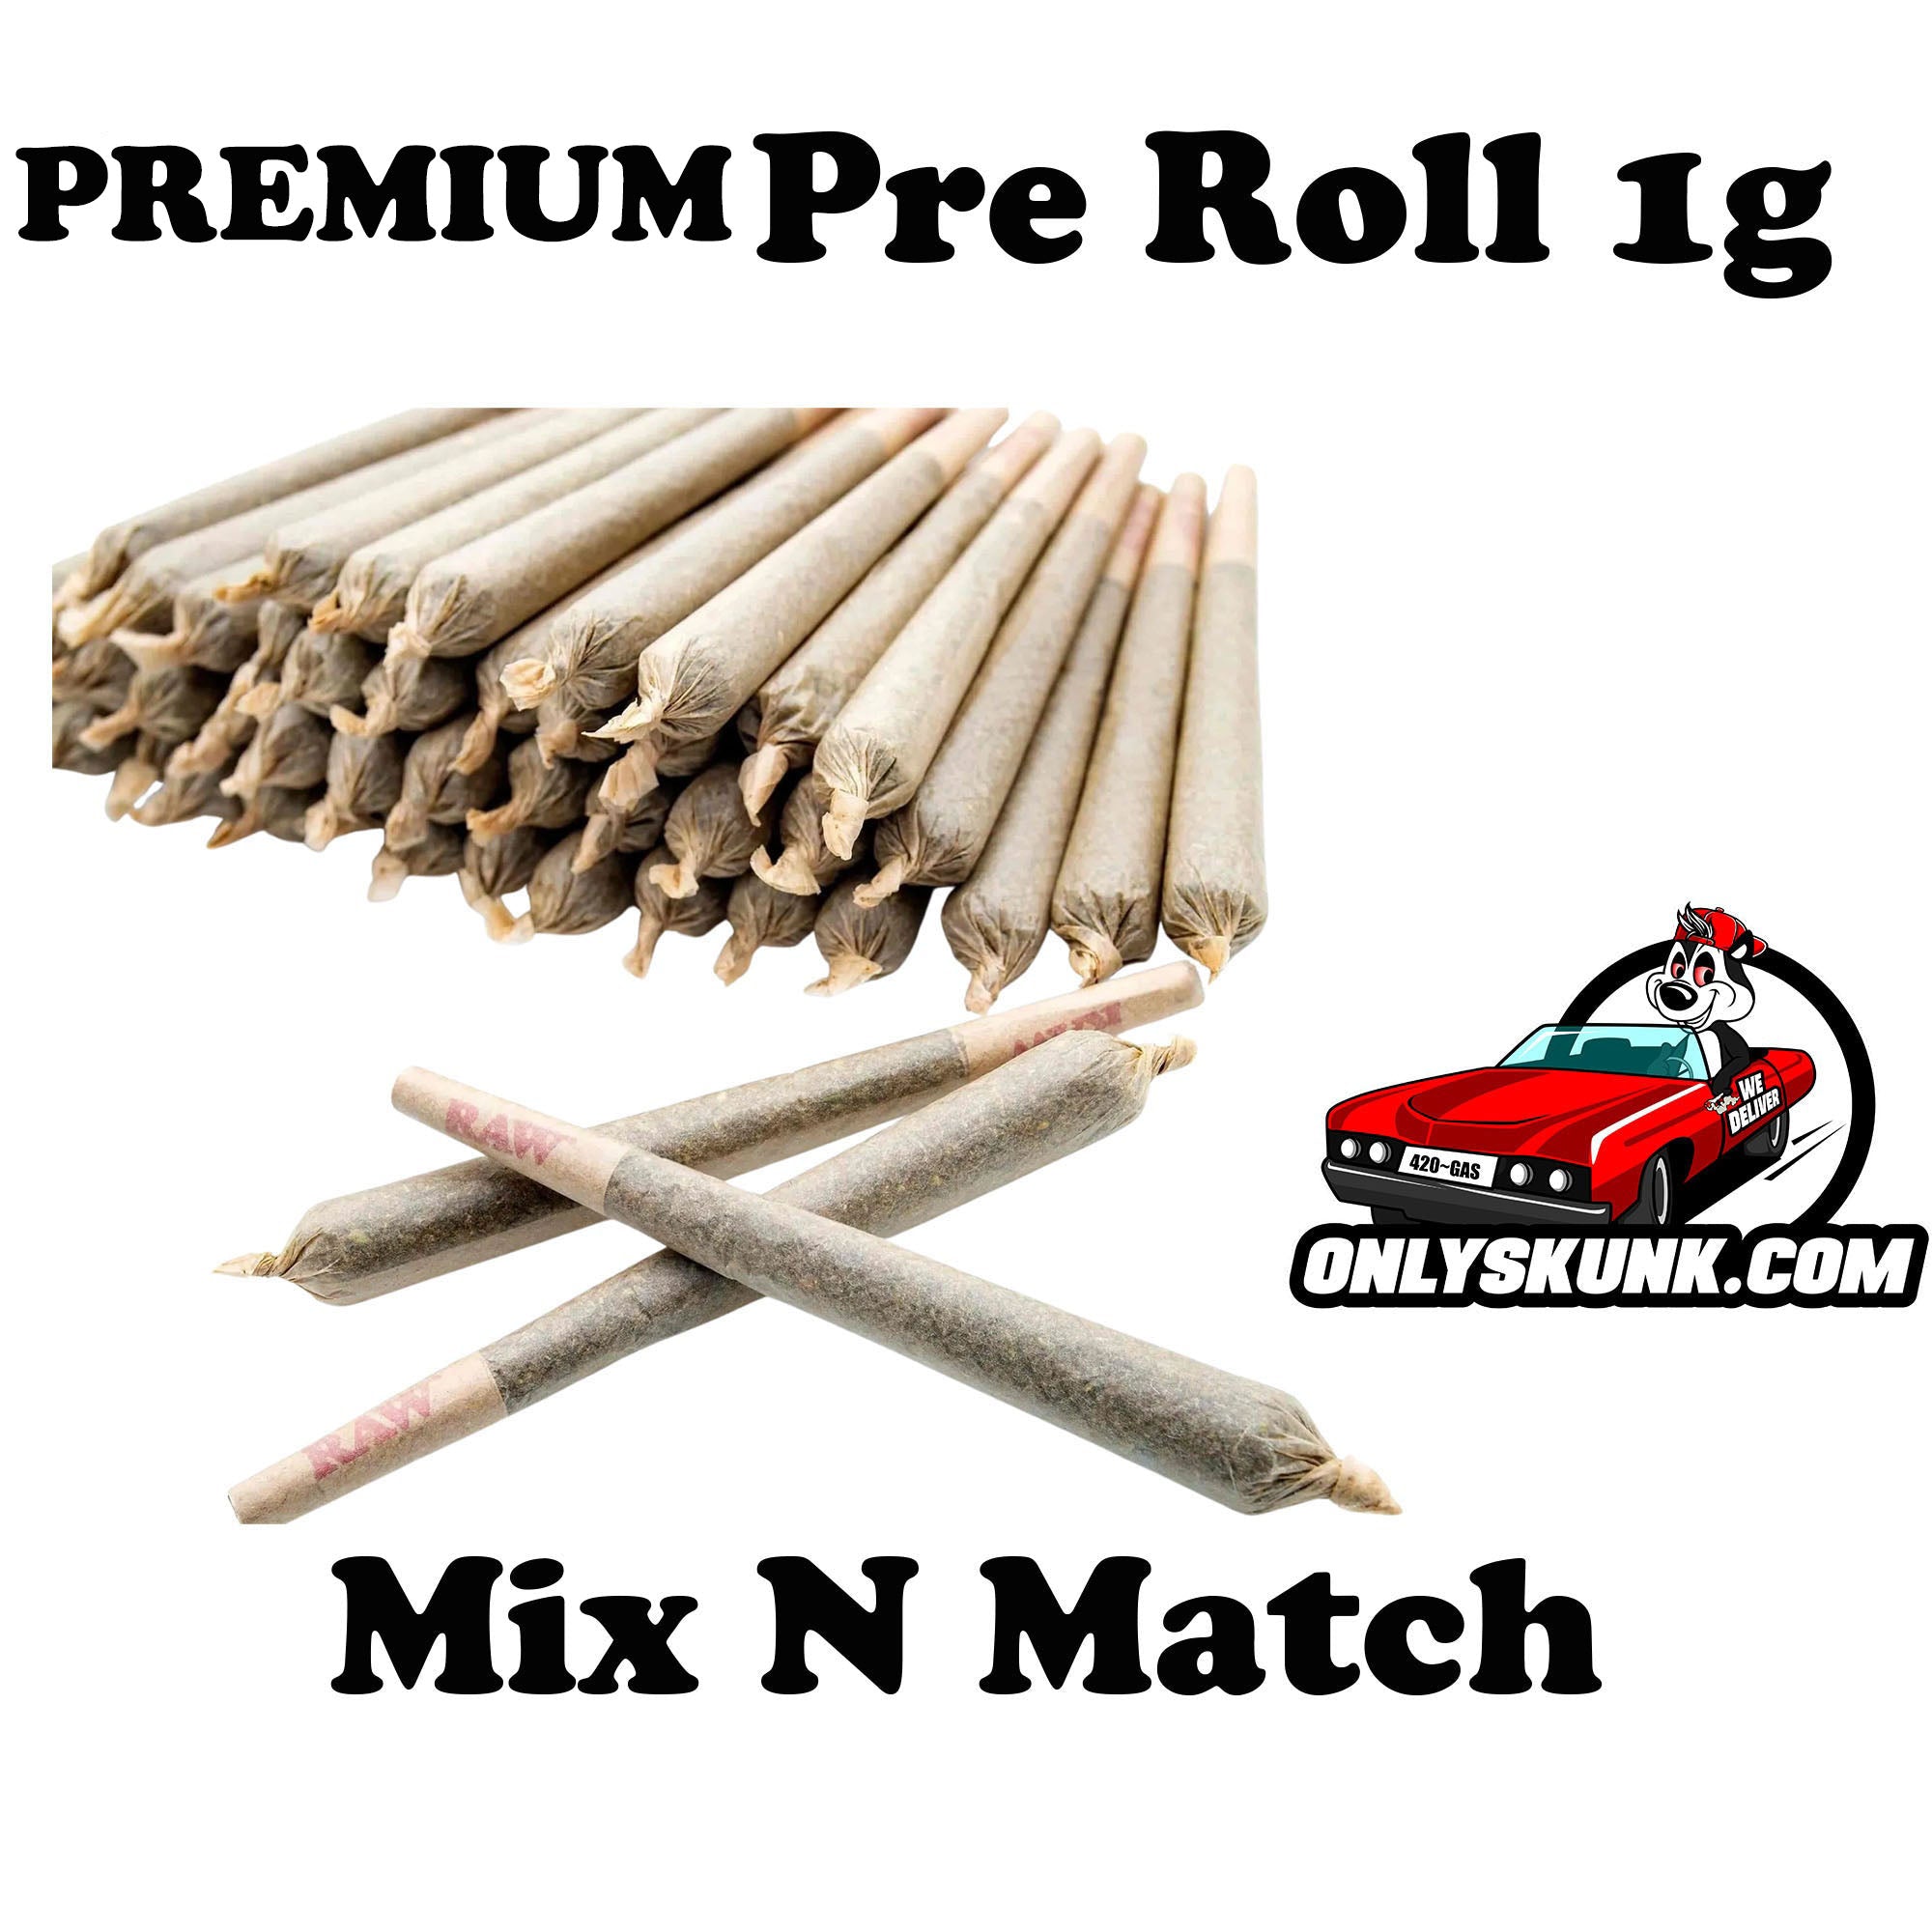 PREMIUM Pre Roll Mix N Match